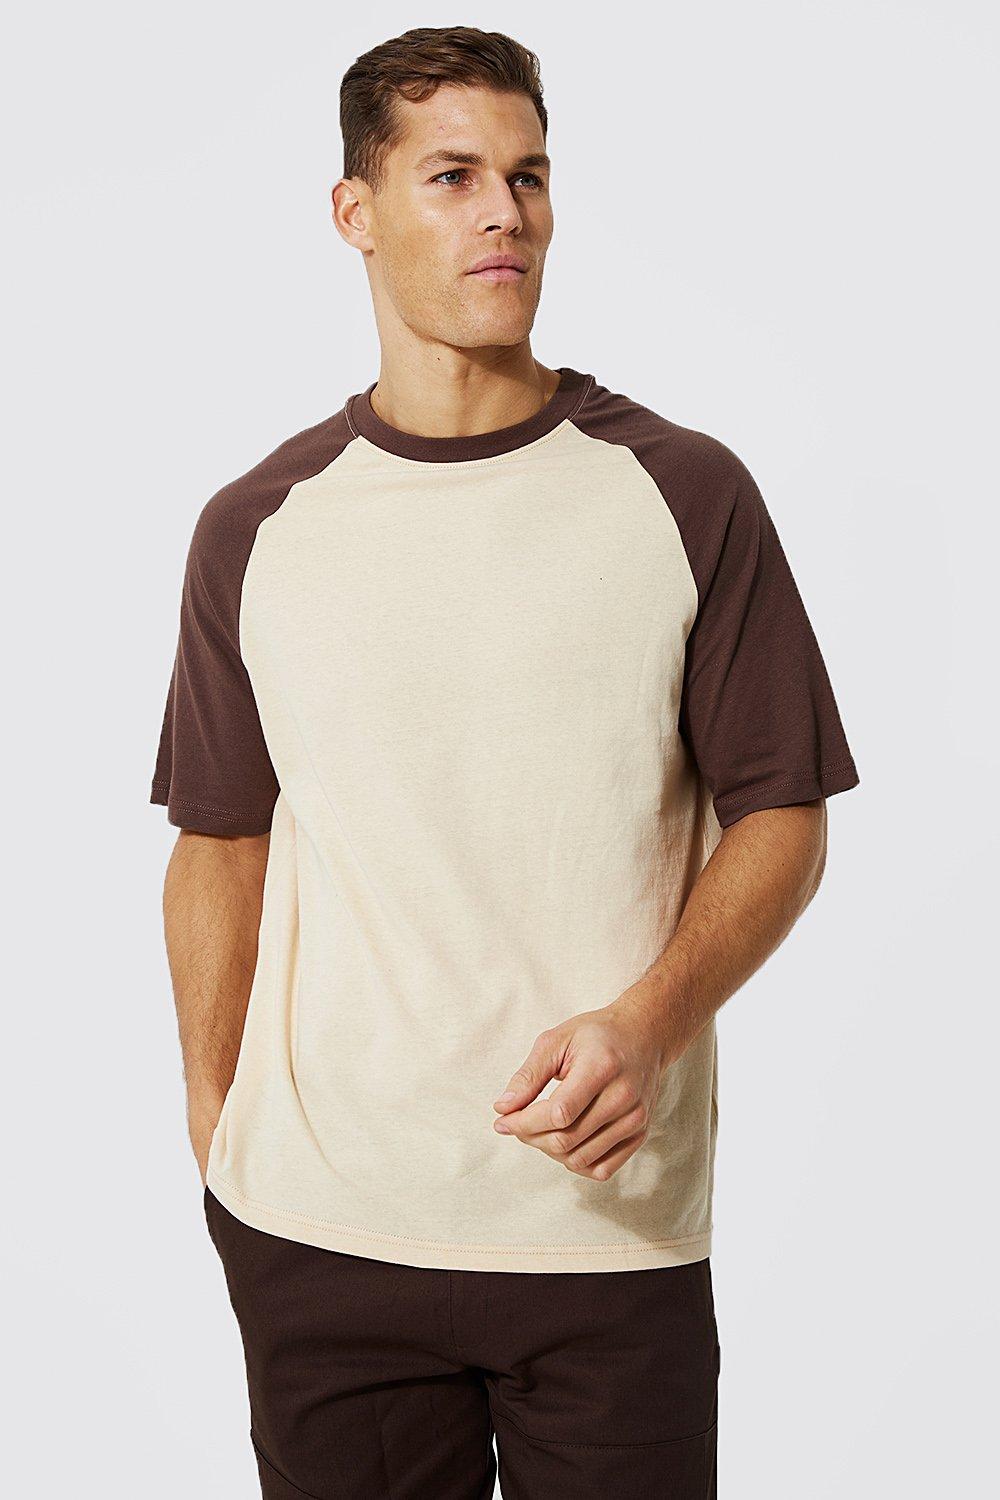 Men’s Retro Workout Clothes 70s, 80s, 90s| Tracksuits, Sweatshirts Mens Tall Raglan Detail T-shirt - Beige $9.00 AT vintagedancer.com